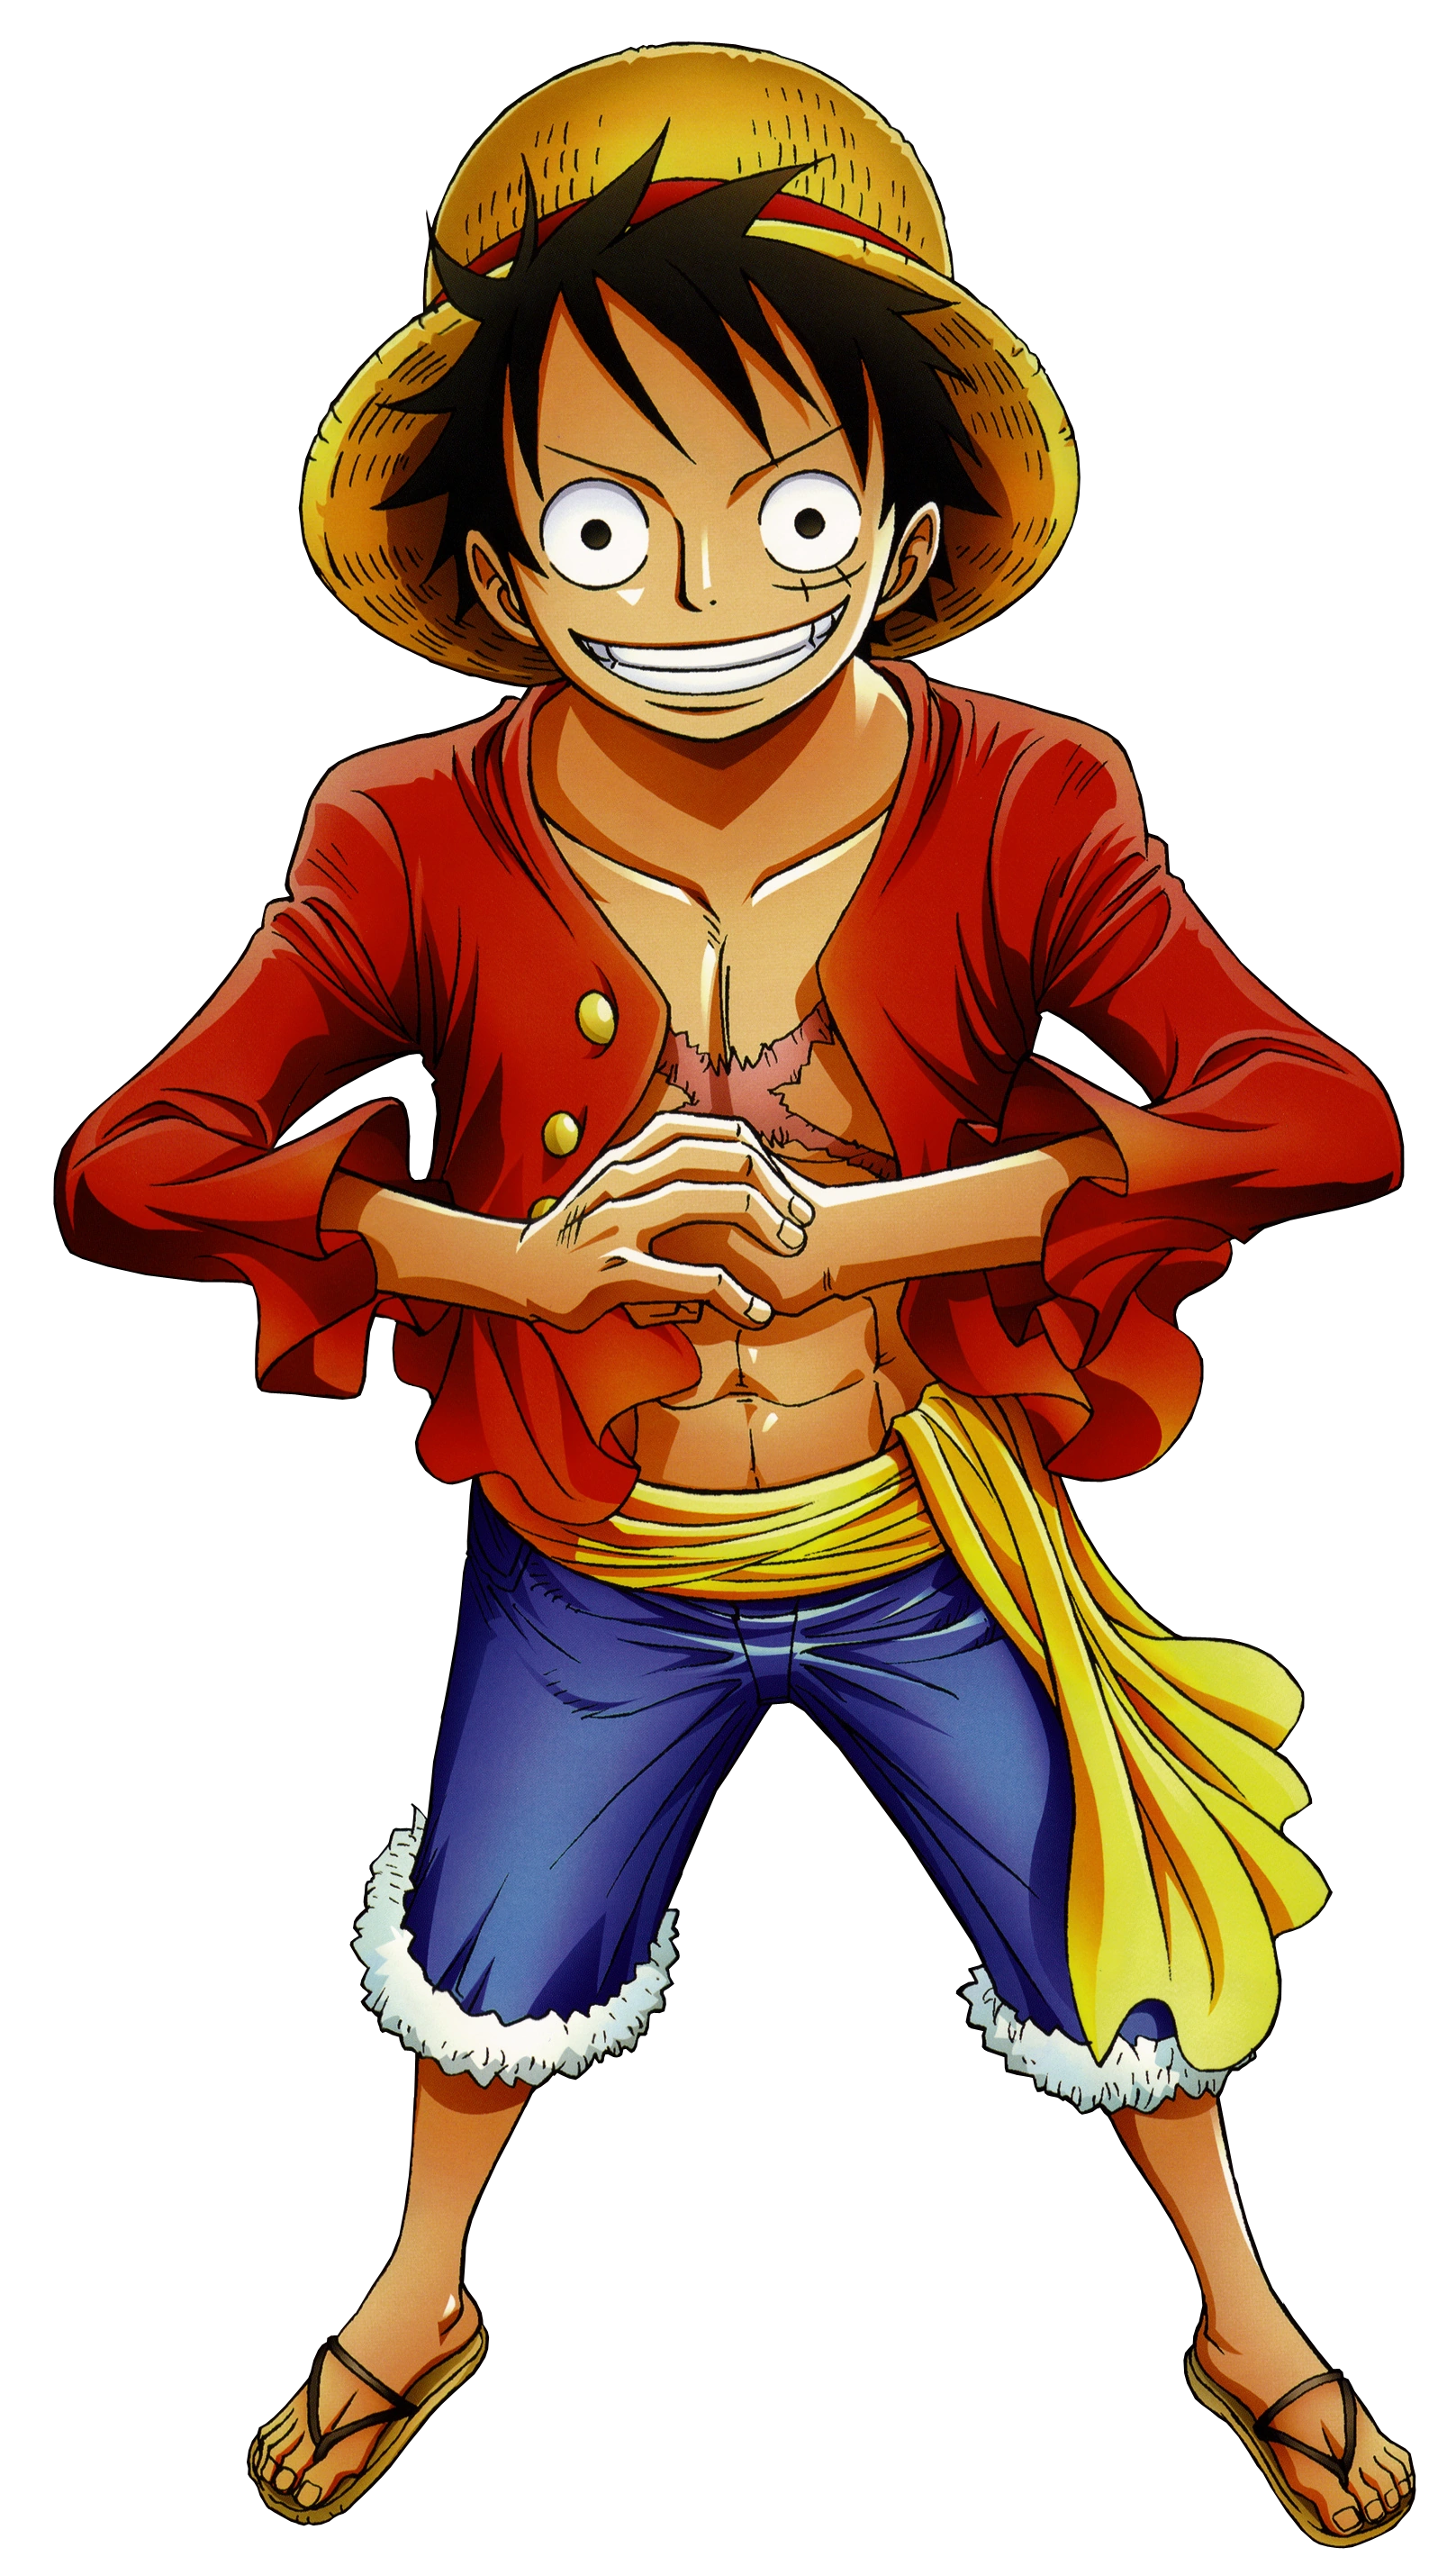 One Piece: Tudo sobre Monkey D. Luffy